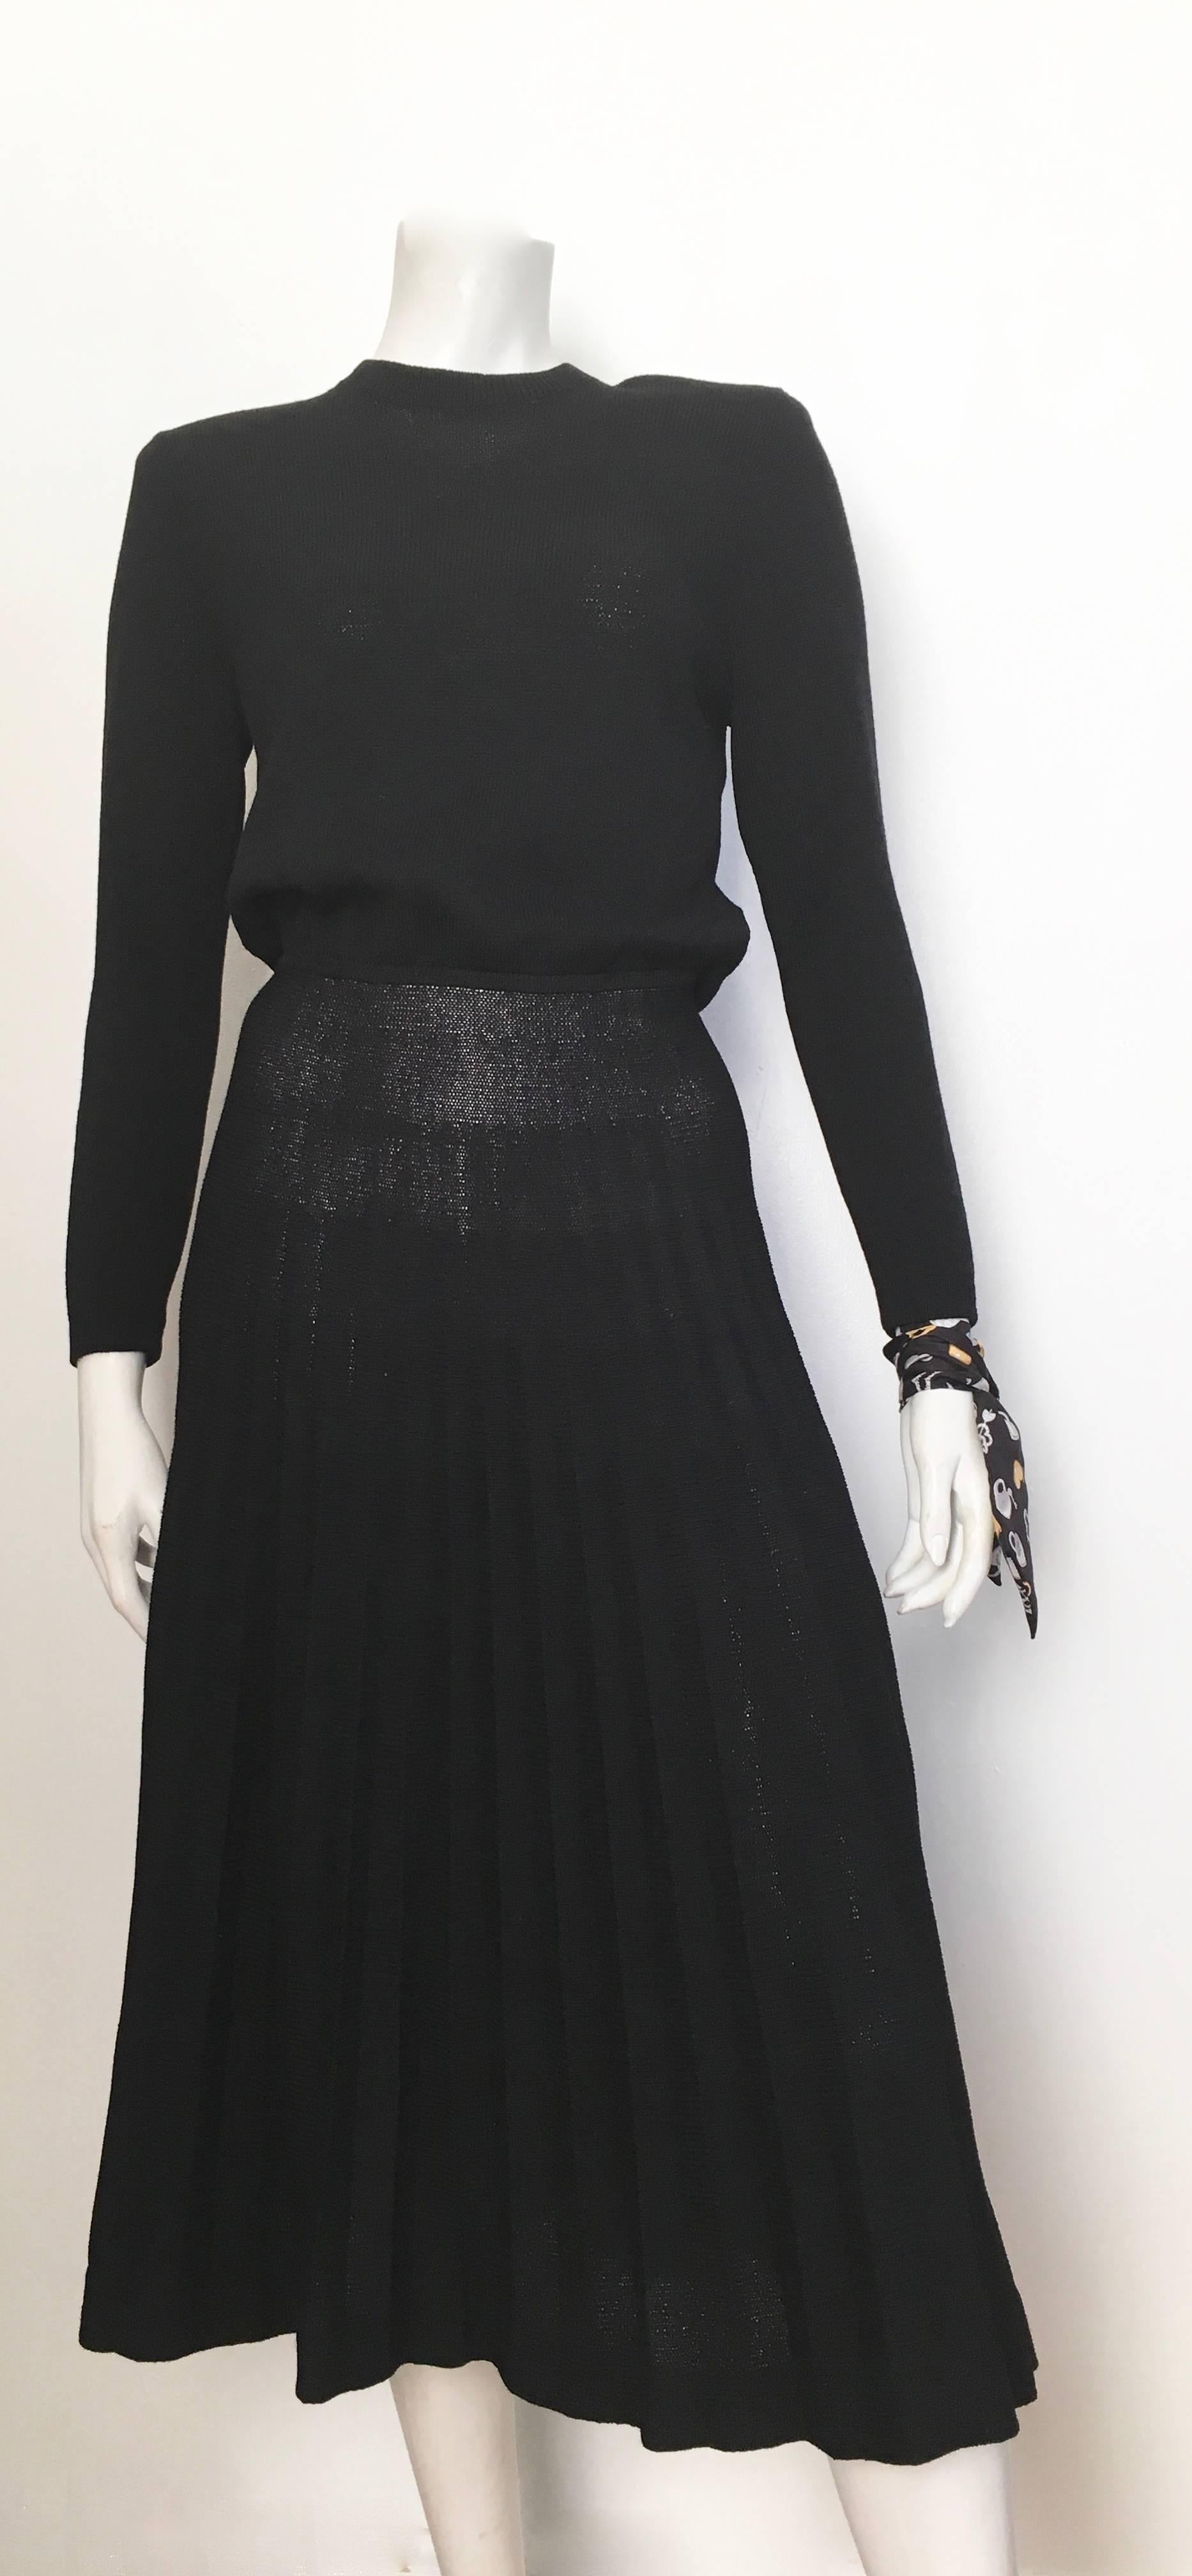 St. John for Neiman Marcus 1980s Black Pleated Knit Dress Size 4 / 6.  2